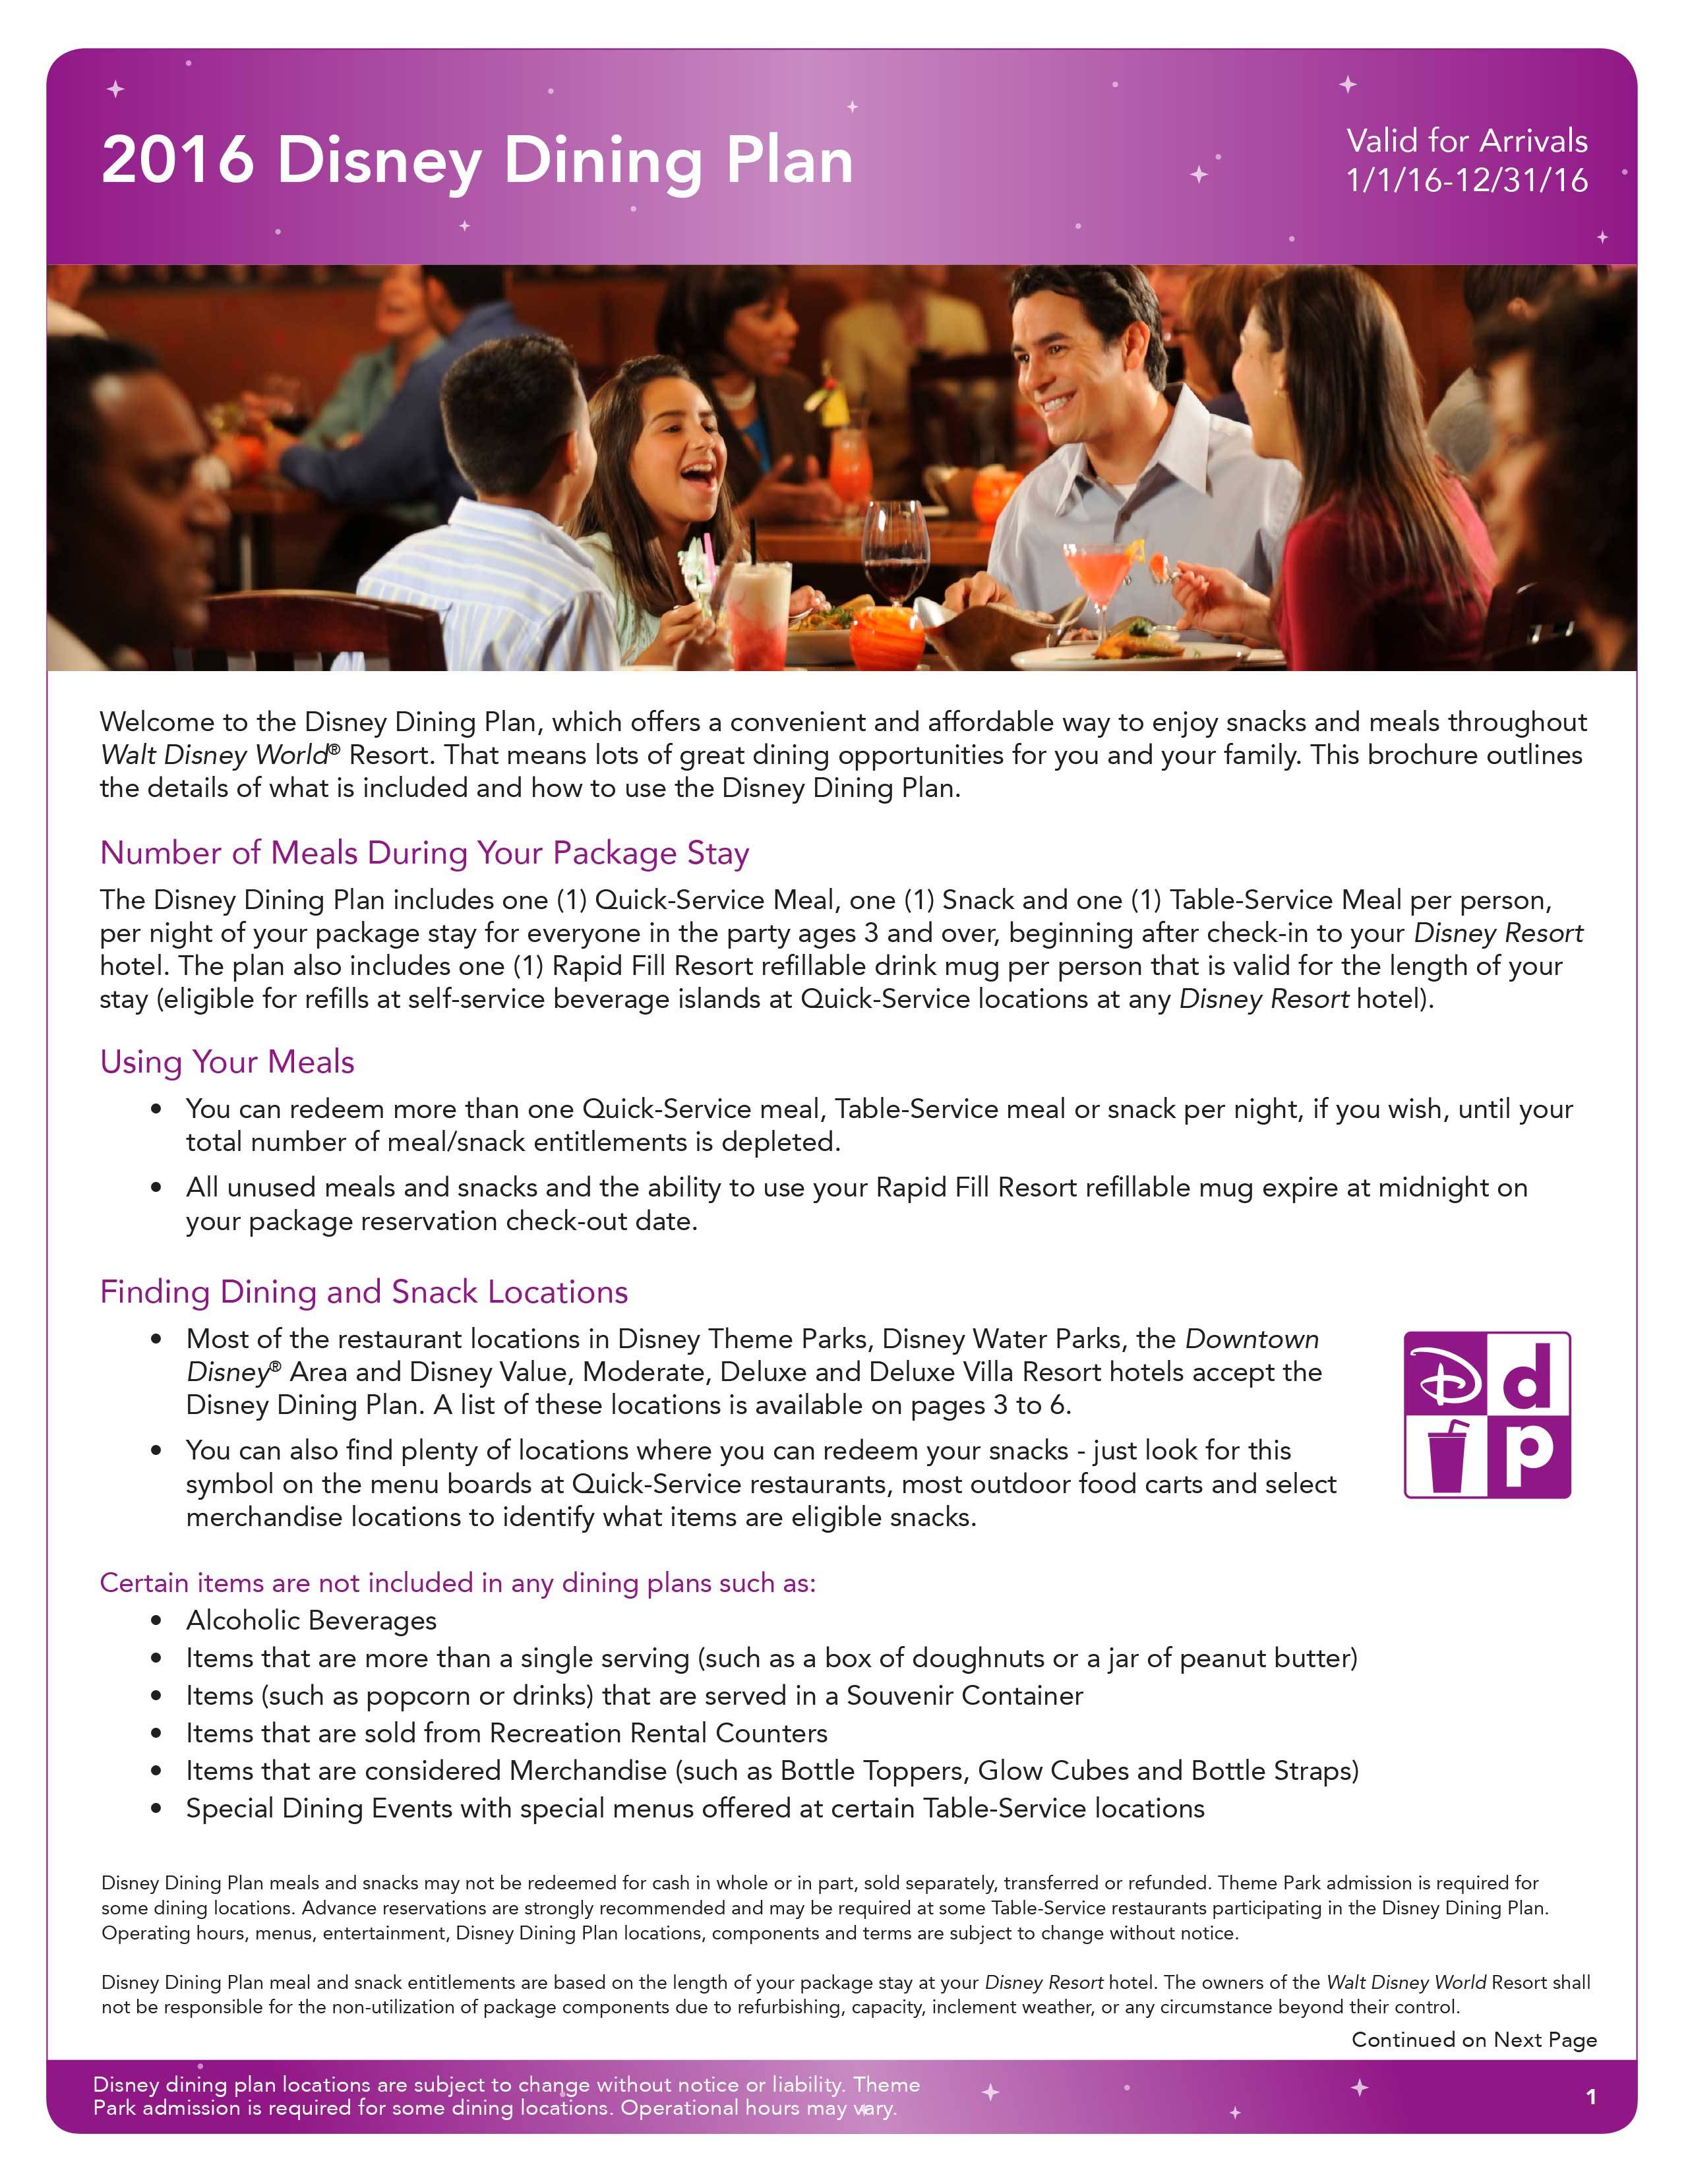 2016 Disney Dining Plan brochure - Page 1